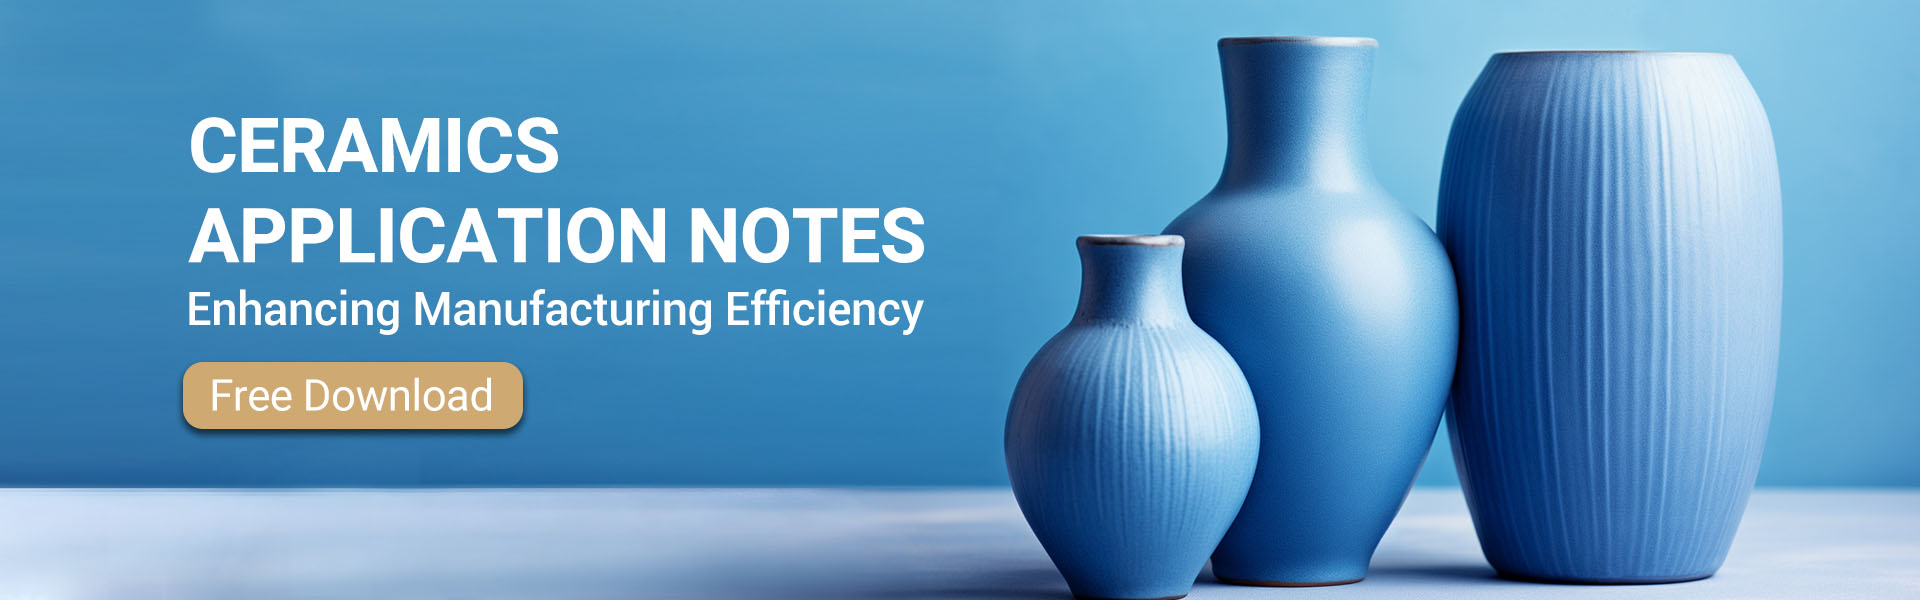 Ceramics Application Notes collection